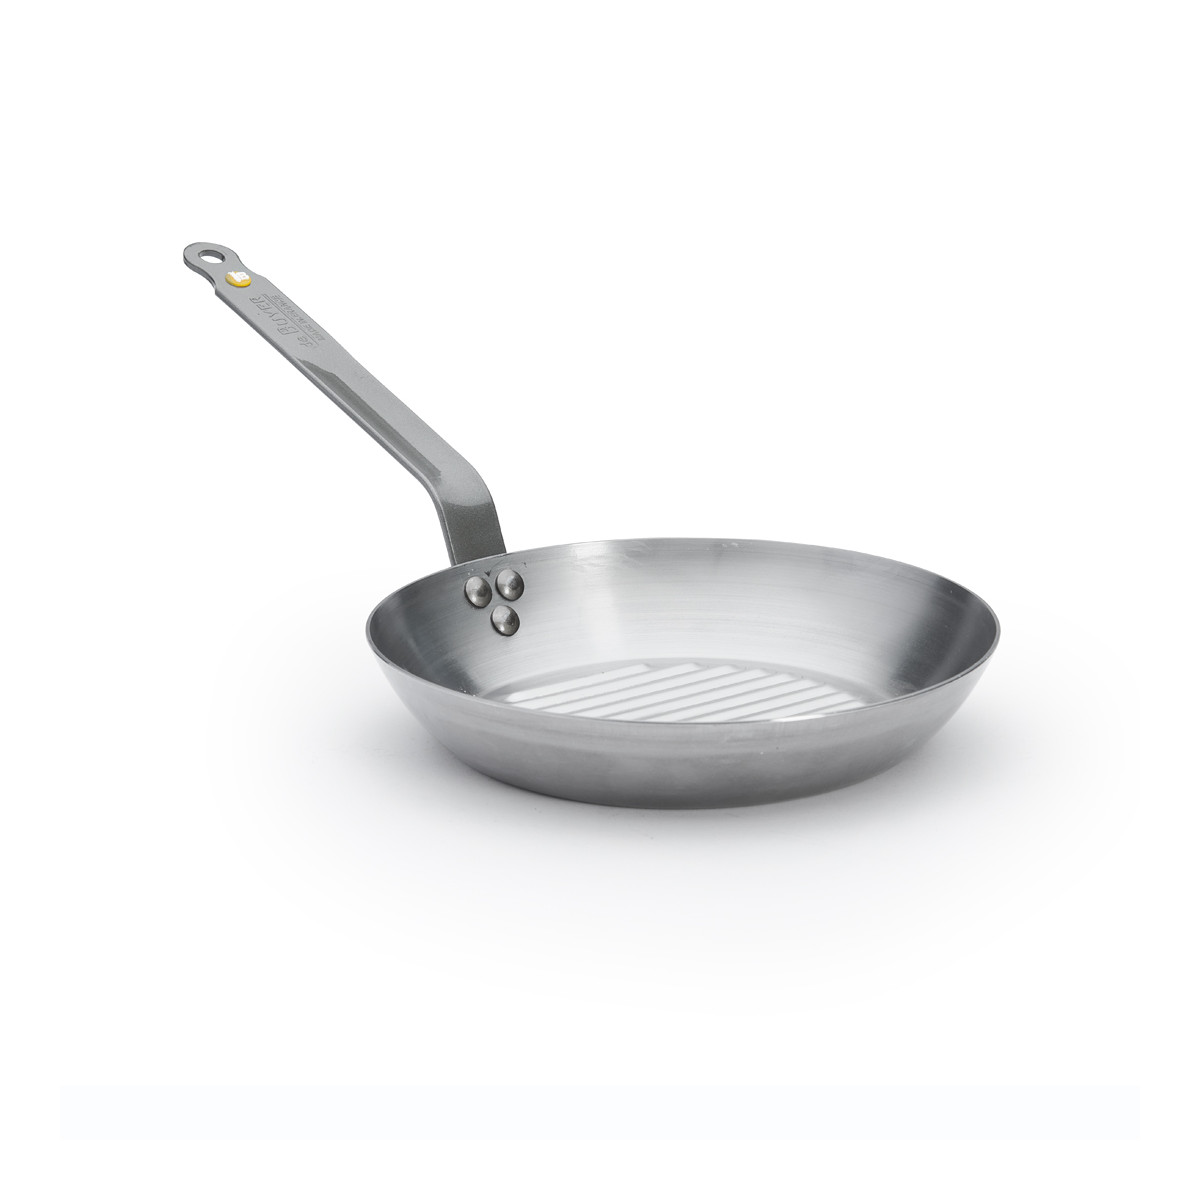 de Buyer MINERAL B Fry Pan Review: A Solid Nonstick Pan